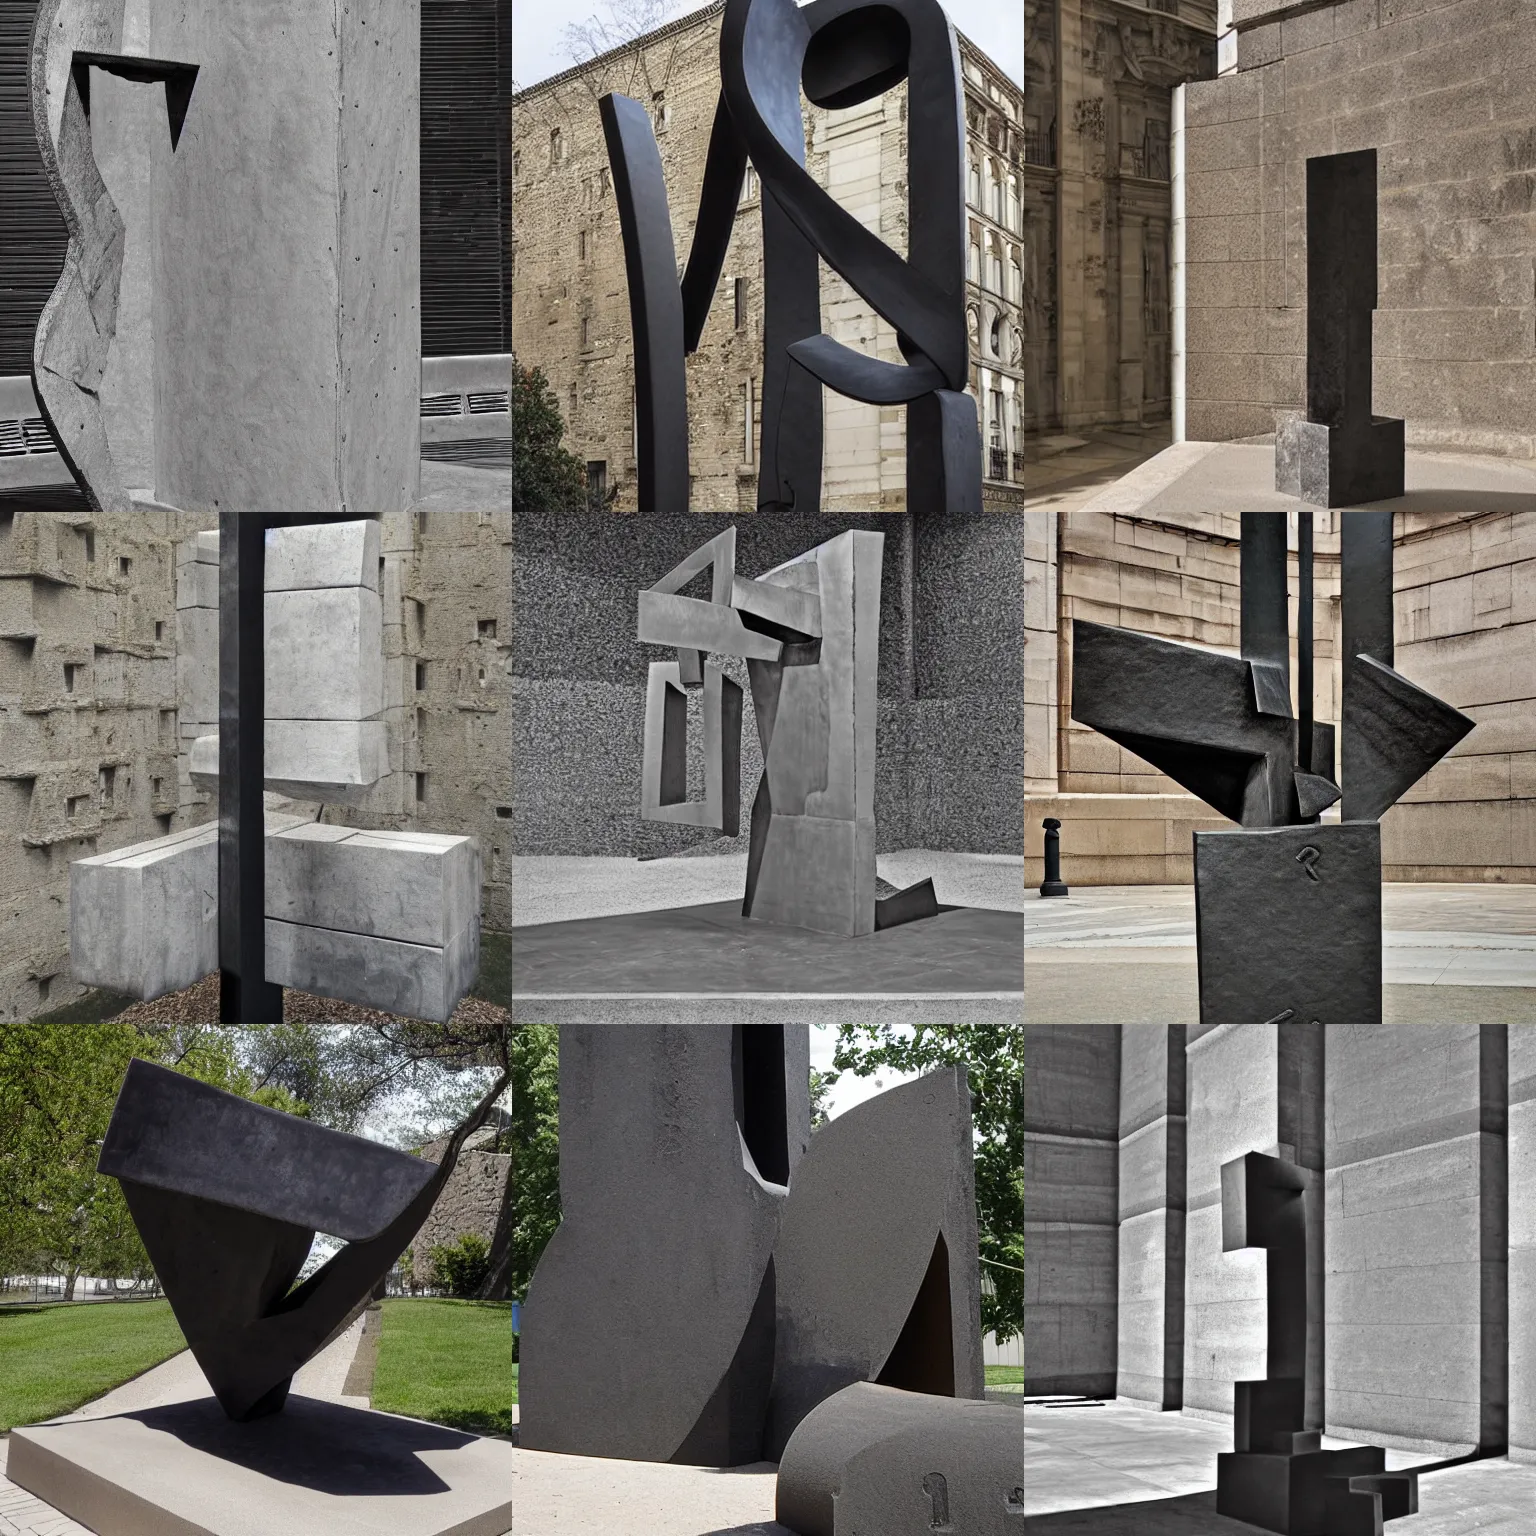 Prompt: The telephone. Award-winning sculpture by Eduardo Chillida and Giovanni Battista Piranesi, made of steel